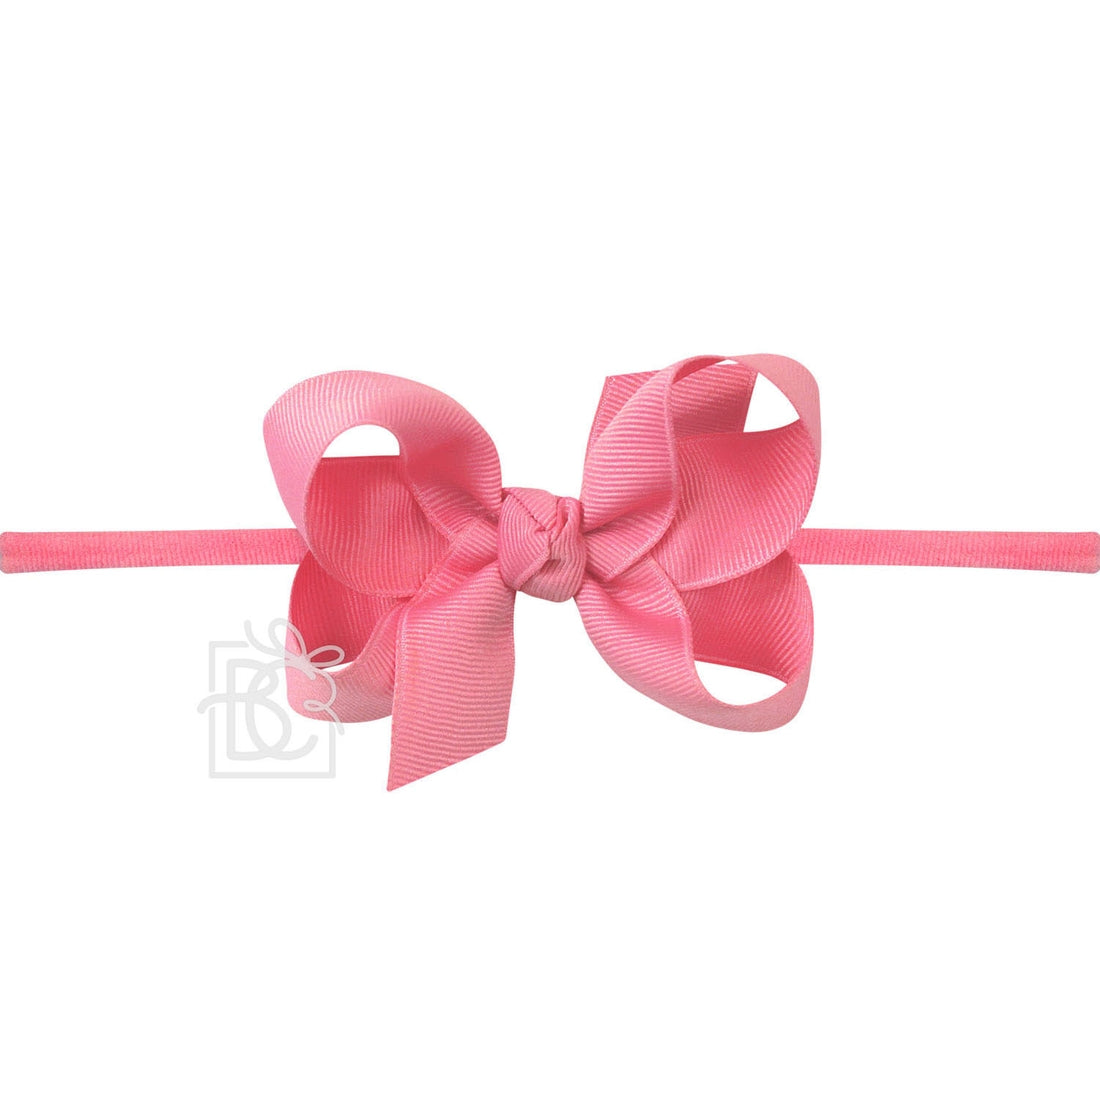 Medium Grosgrain Bow on Baby Headband - Hot Pink